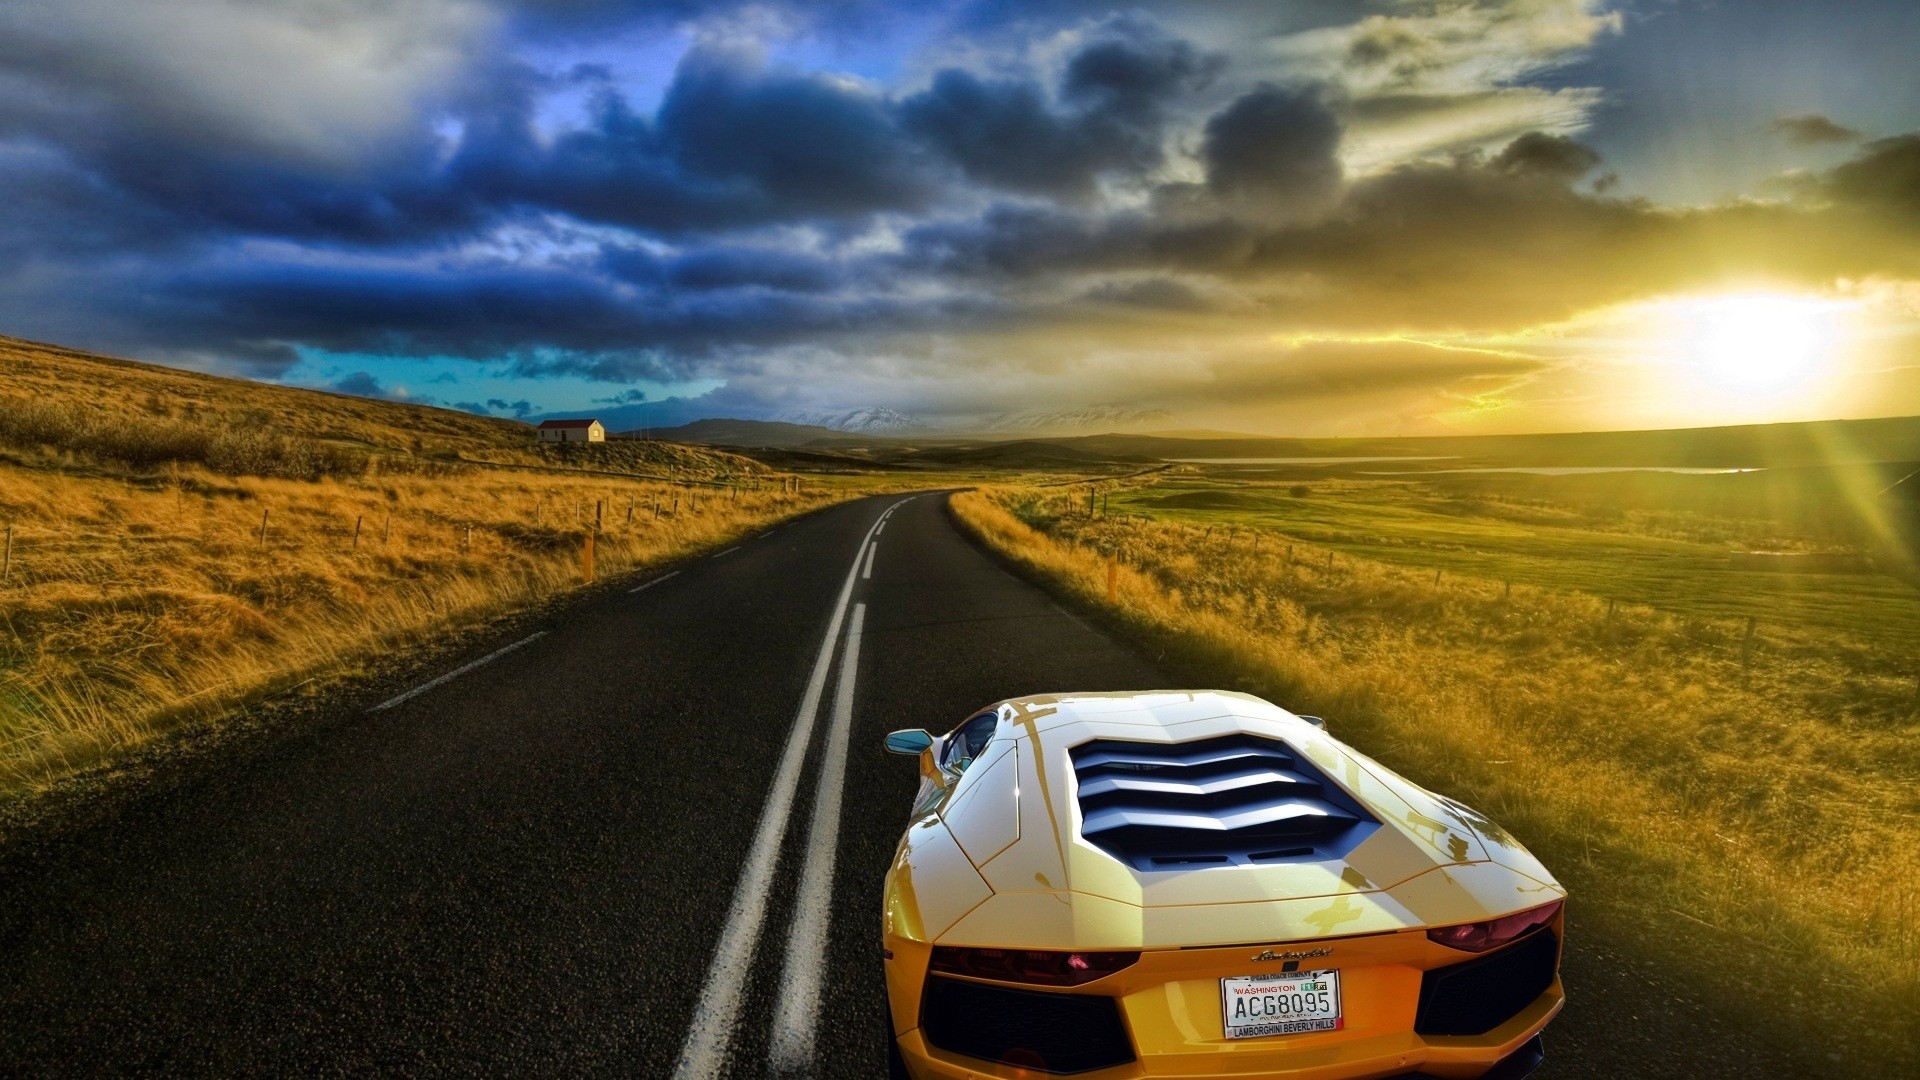 Lamborghini Aventador Sunset Desktop Pc And Mac Wallpaper